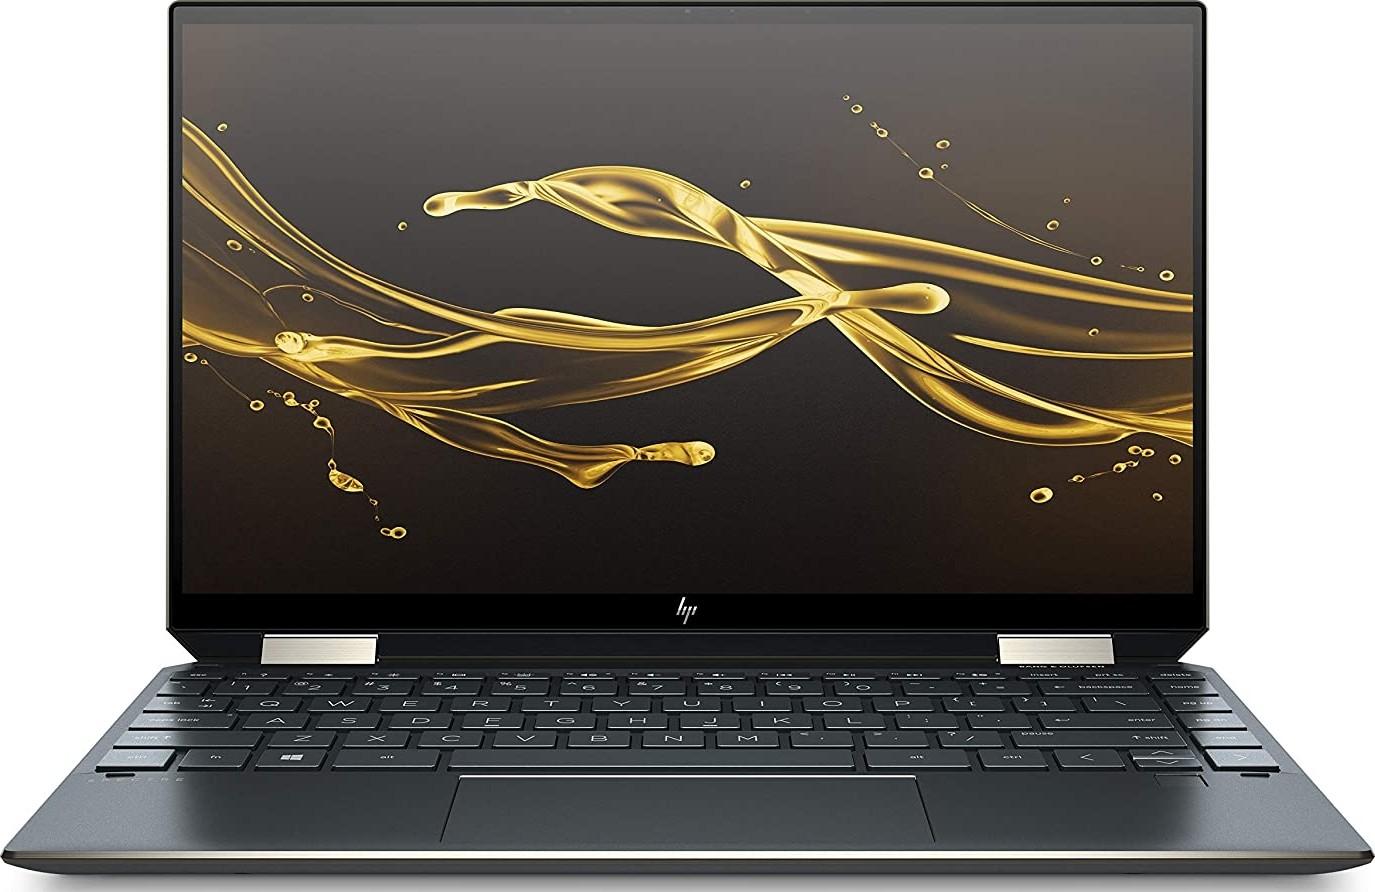 HP New Spectre X360 13-aw0205tu 13.3-inch Laptop (10th Gen i7-1065G7/16GB/512GB SSD/Windows 10 Pro/Intel Iris Plus Graphics), Night Fall Black | HP Spectre 13 x360